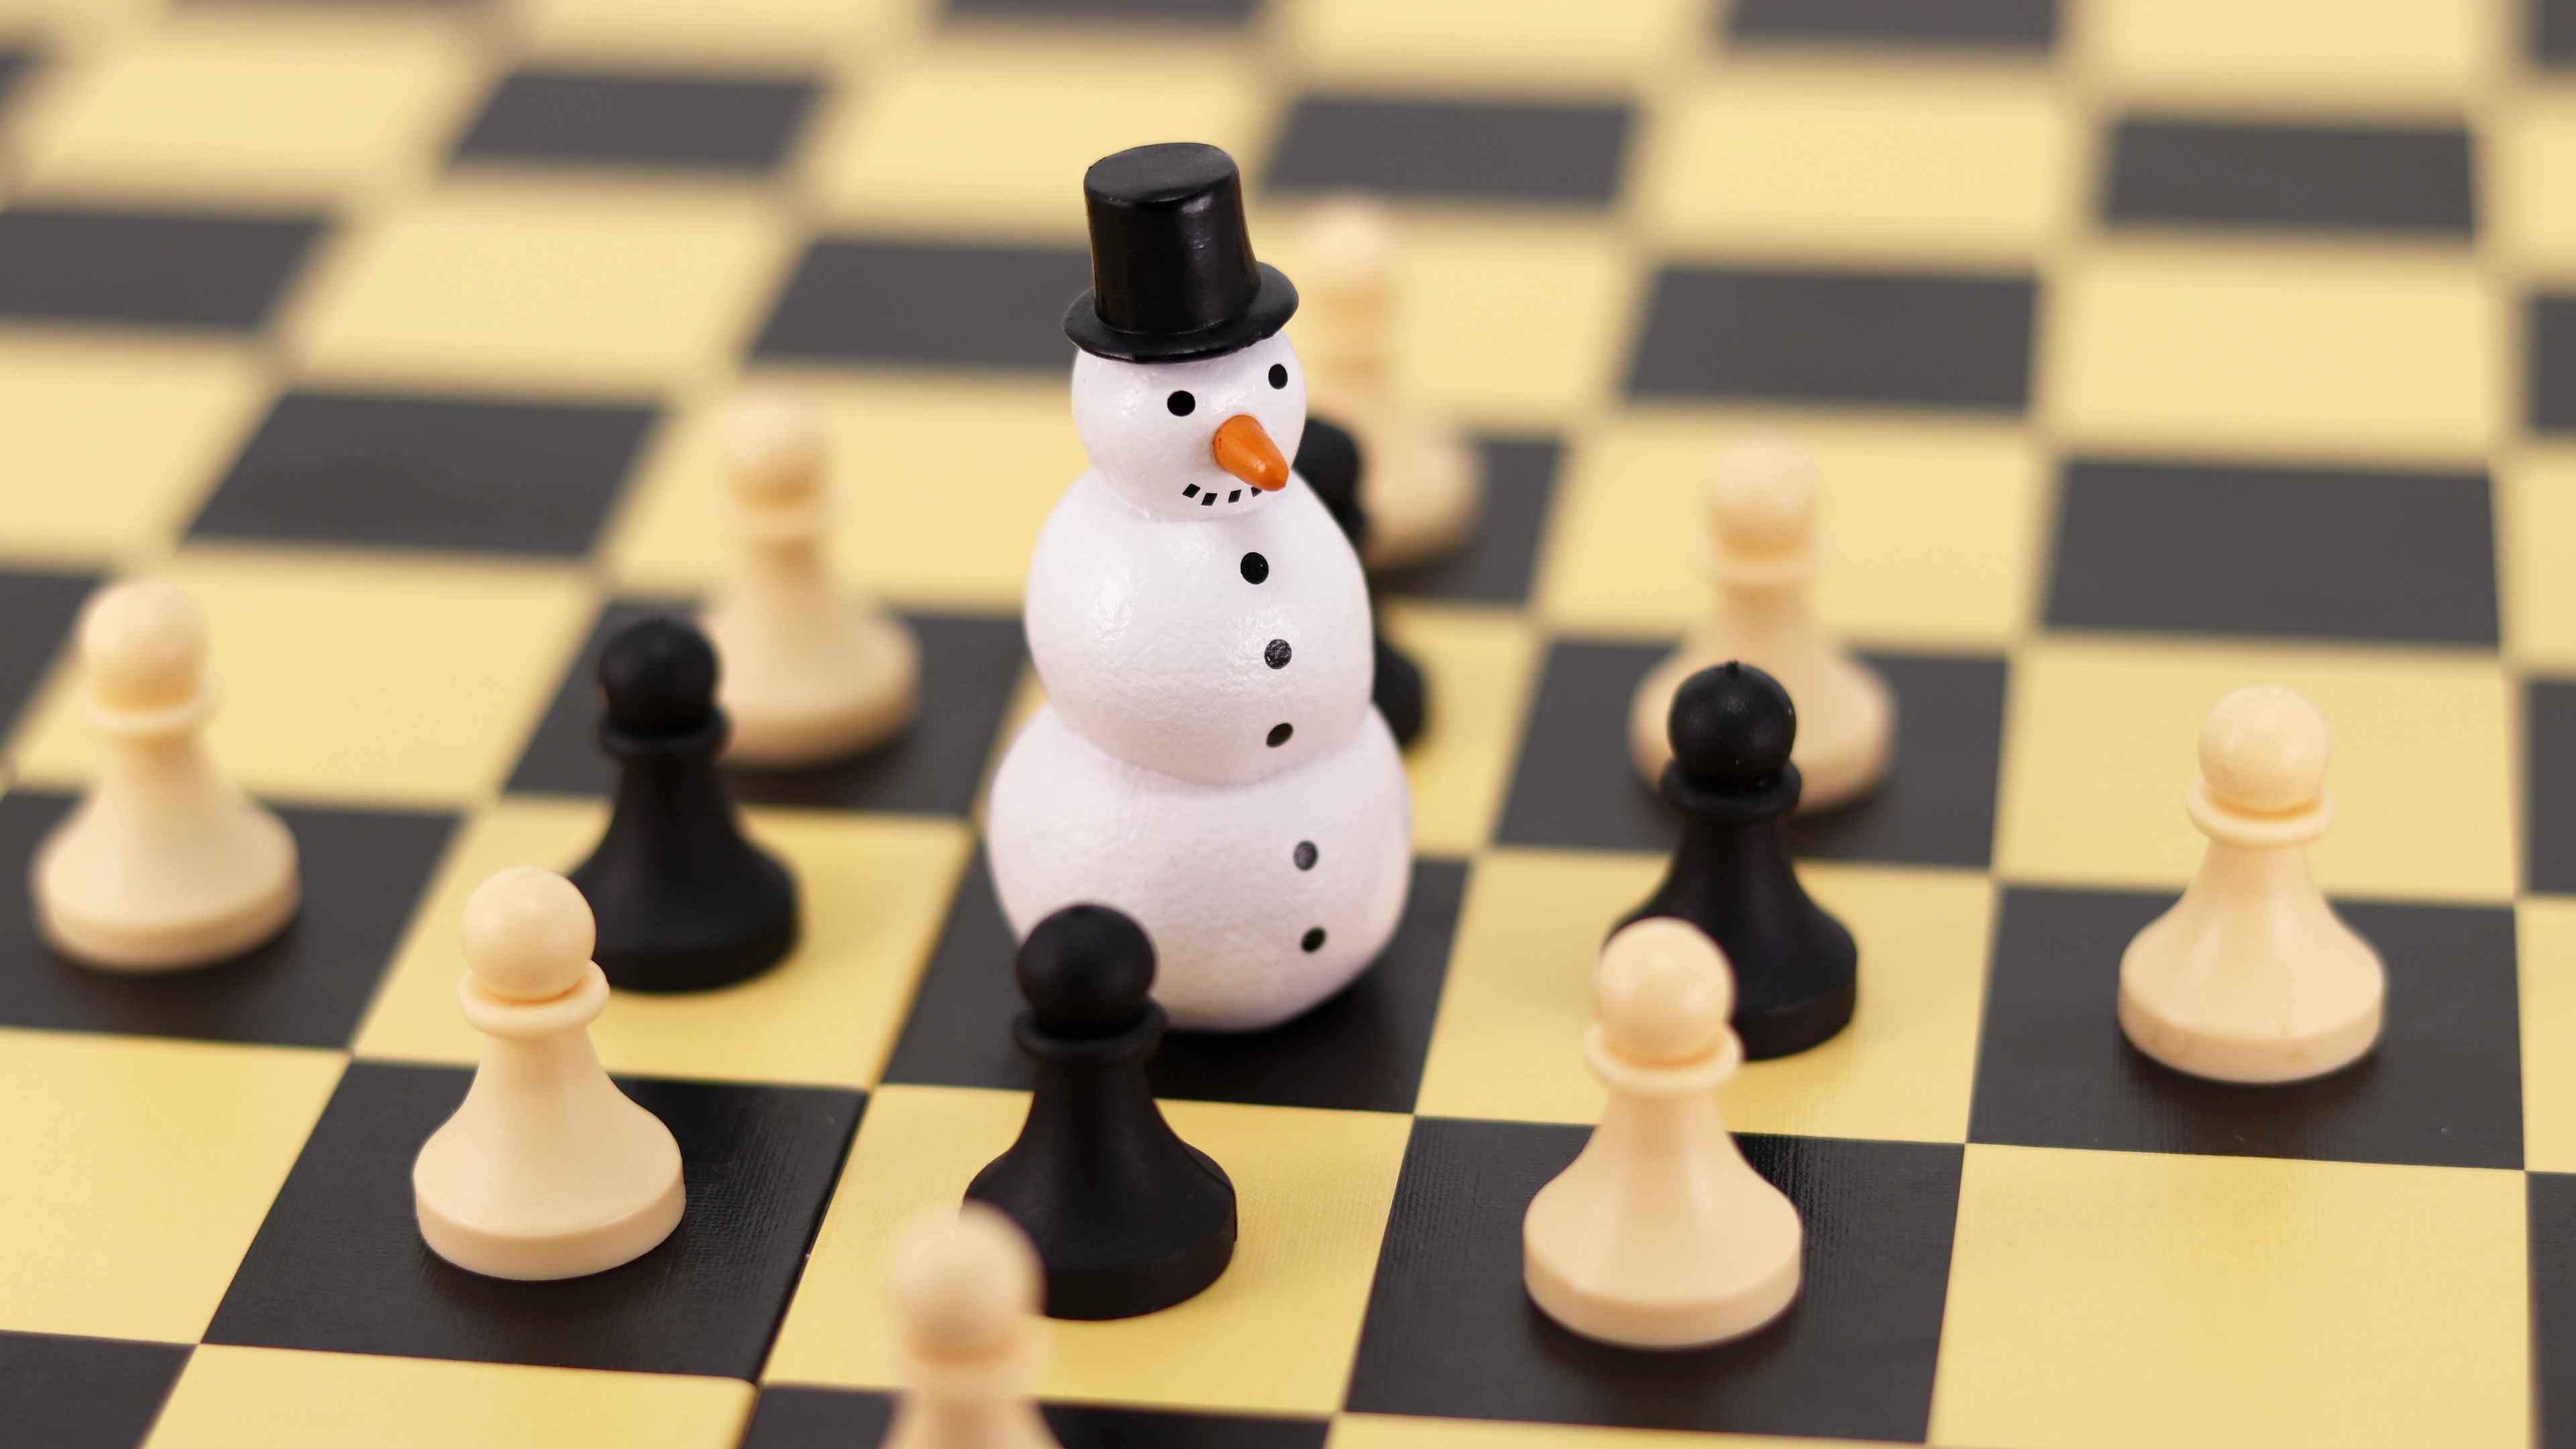 Download wallpaper 3840x2160 chess, snowman, figures, pawns